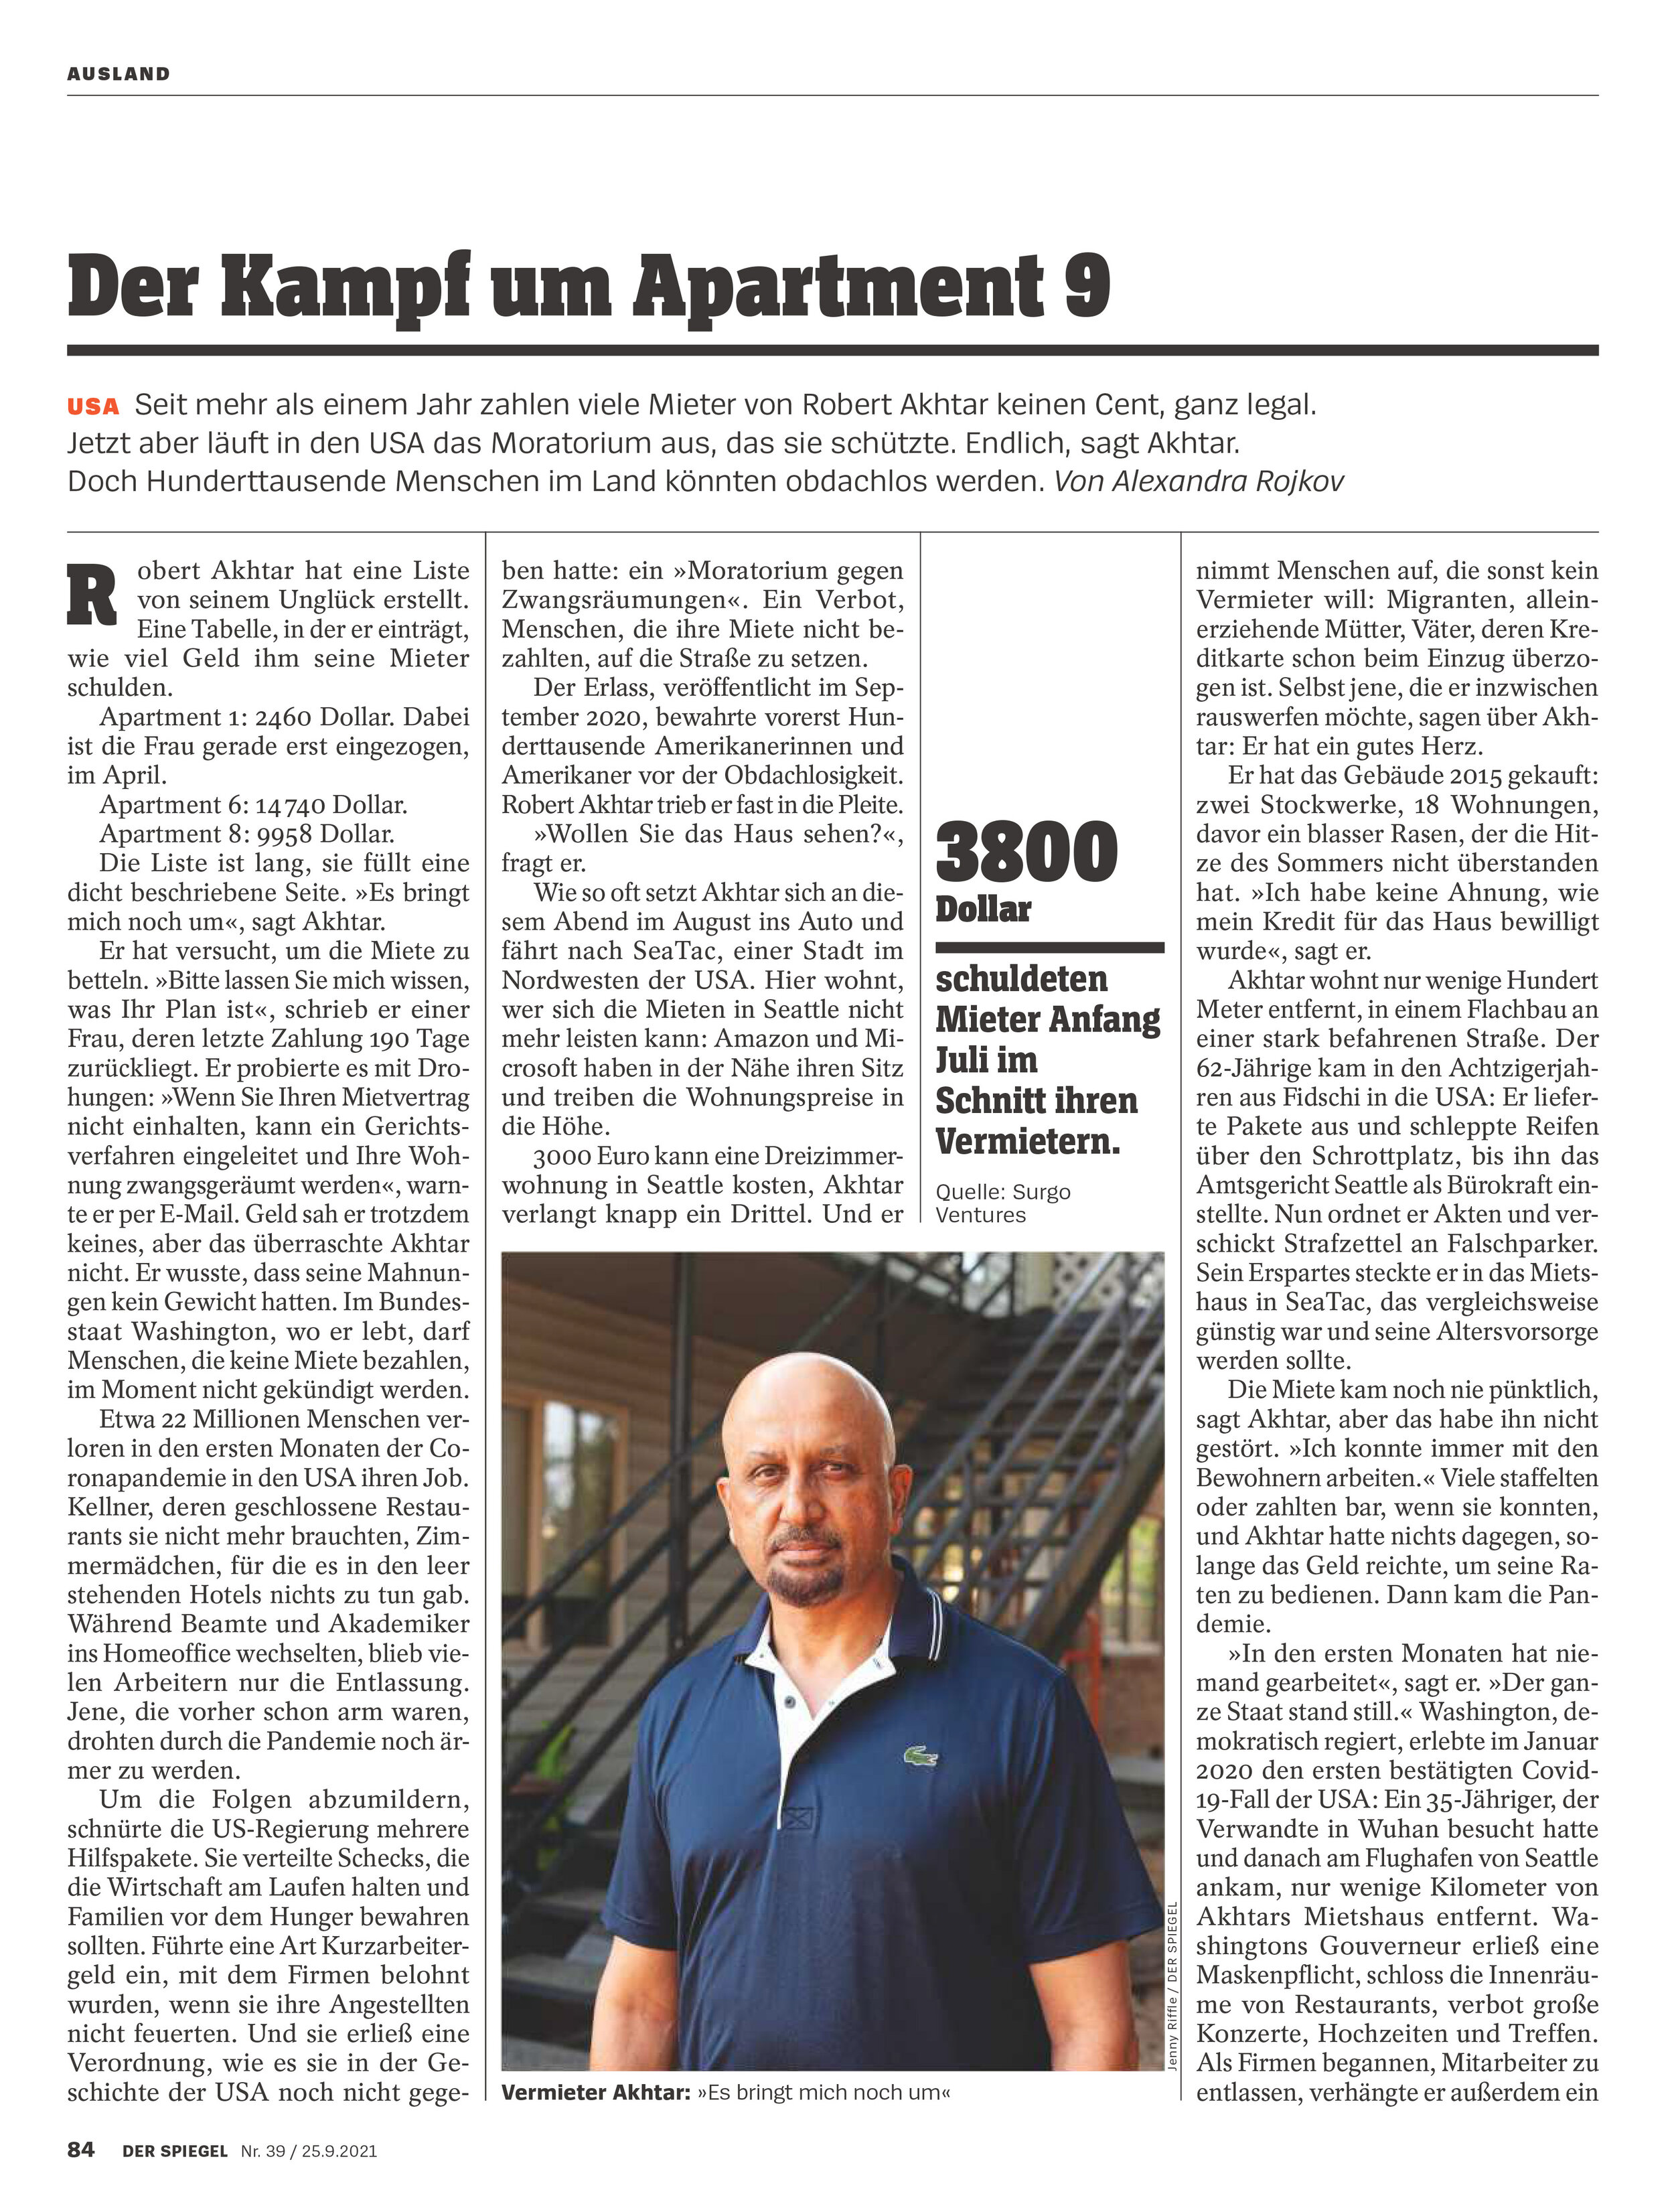 Rent Moratorium for Der Spiegel